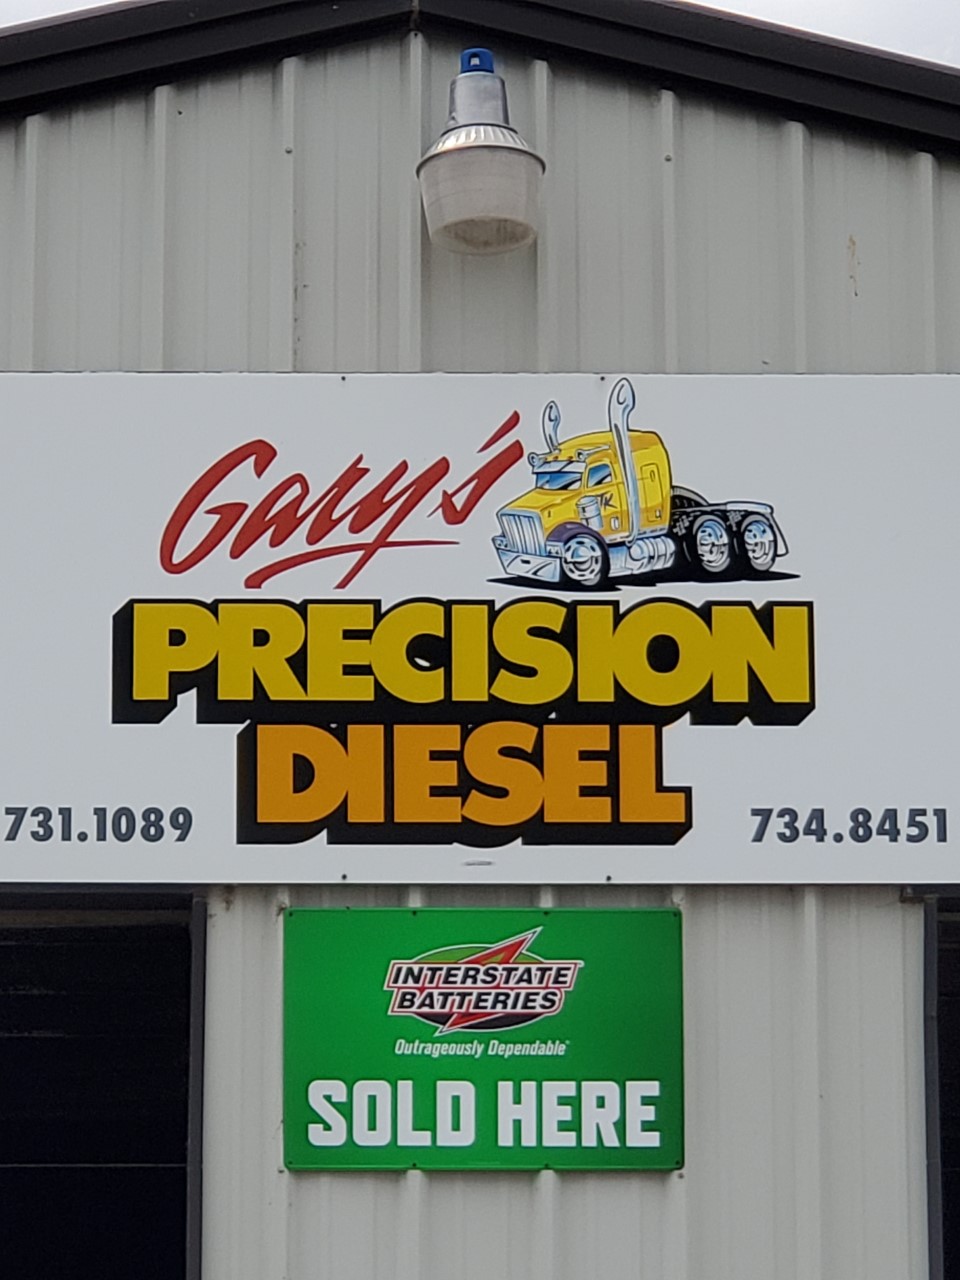 Gary's Precision Diesel